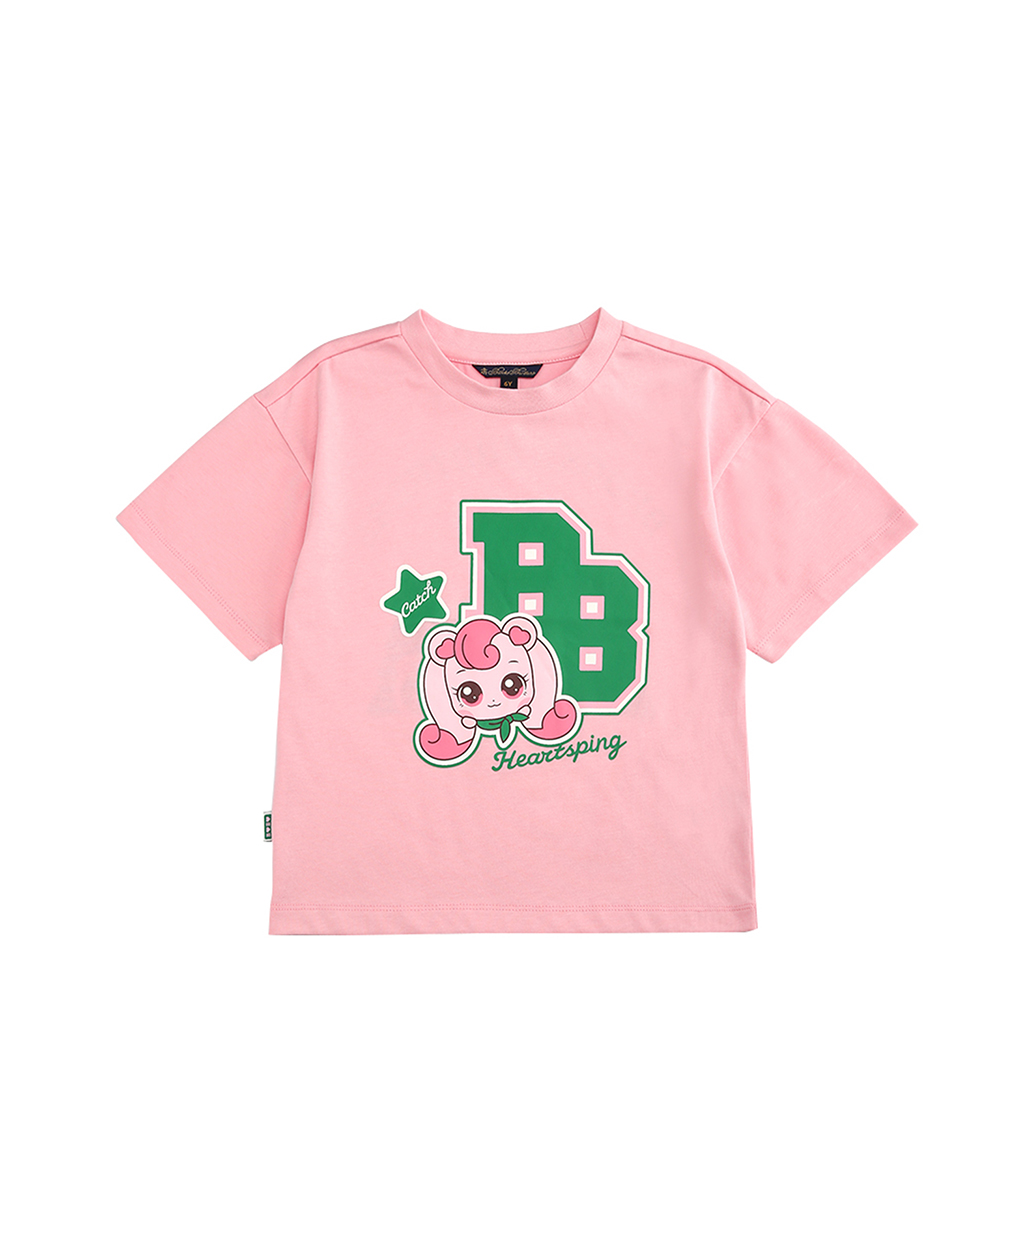 [Catch! Teenieping] BB 티니핑 빅 로고 티셔츠 (핑크)